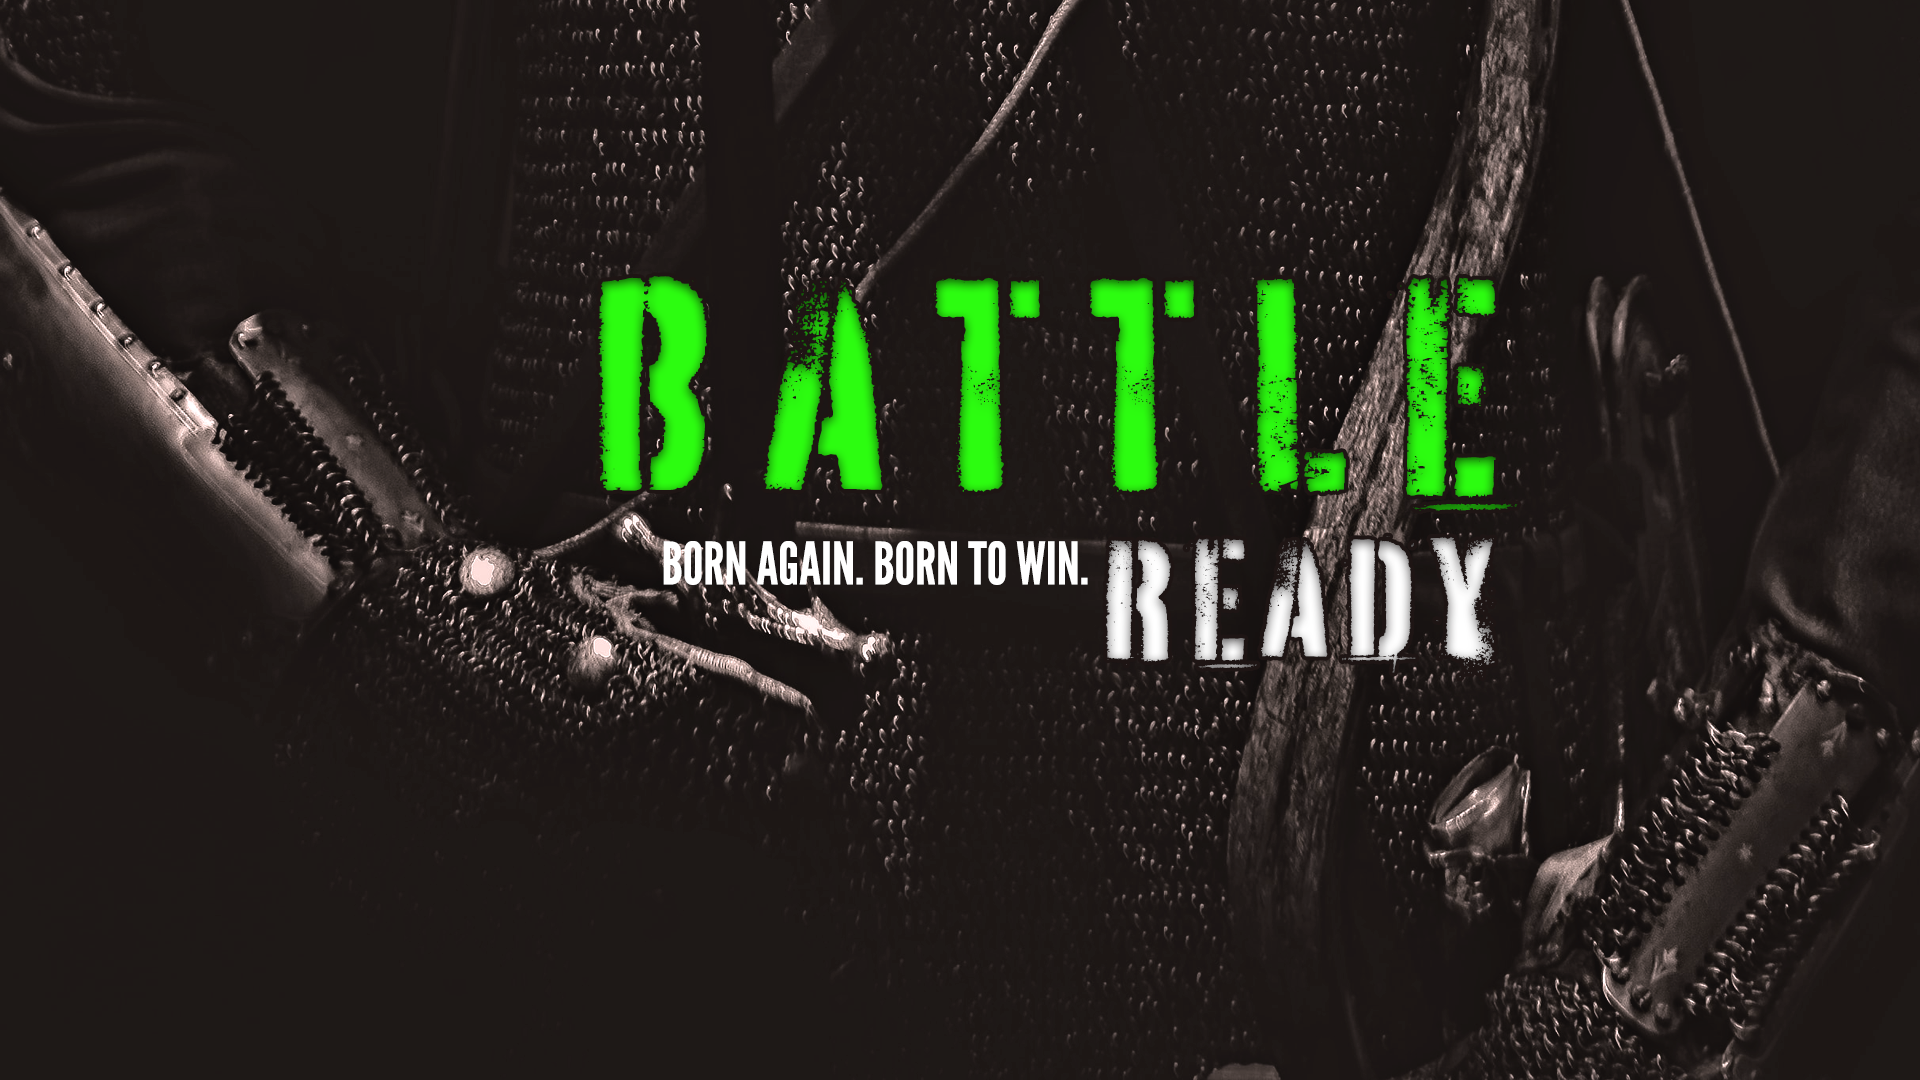 Battle Ready: Born Again. Born to Win.